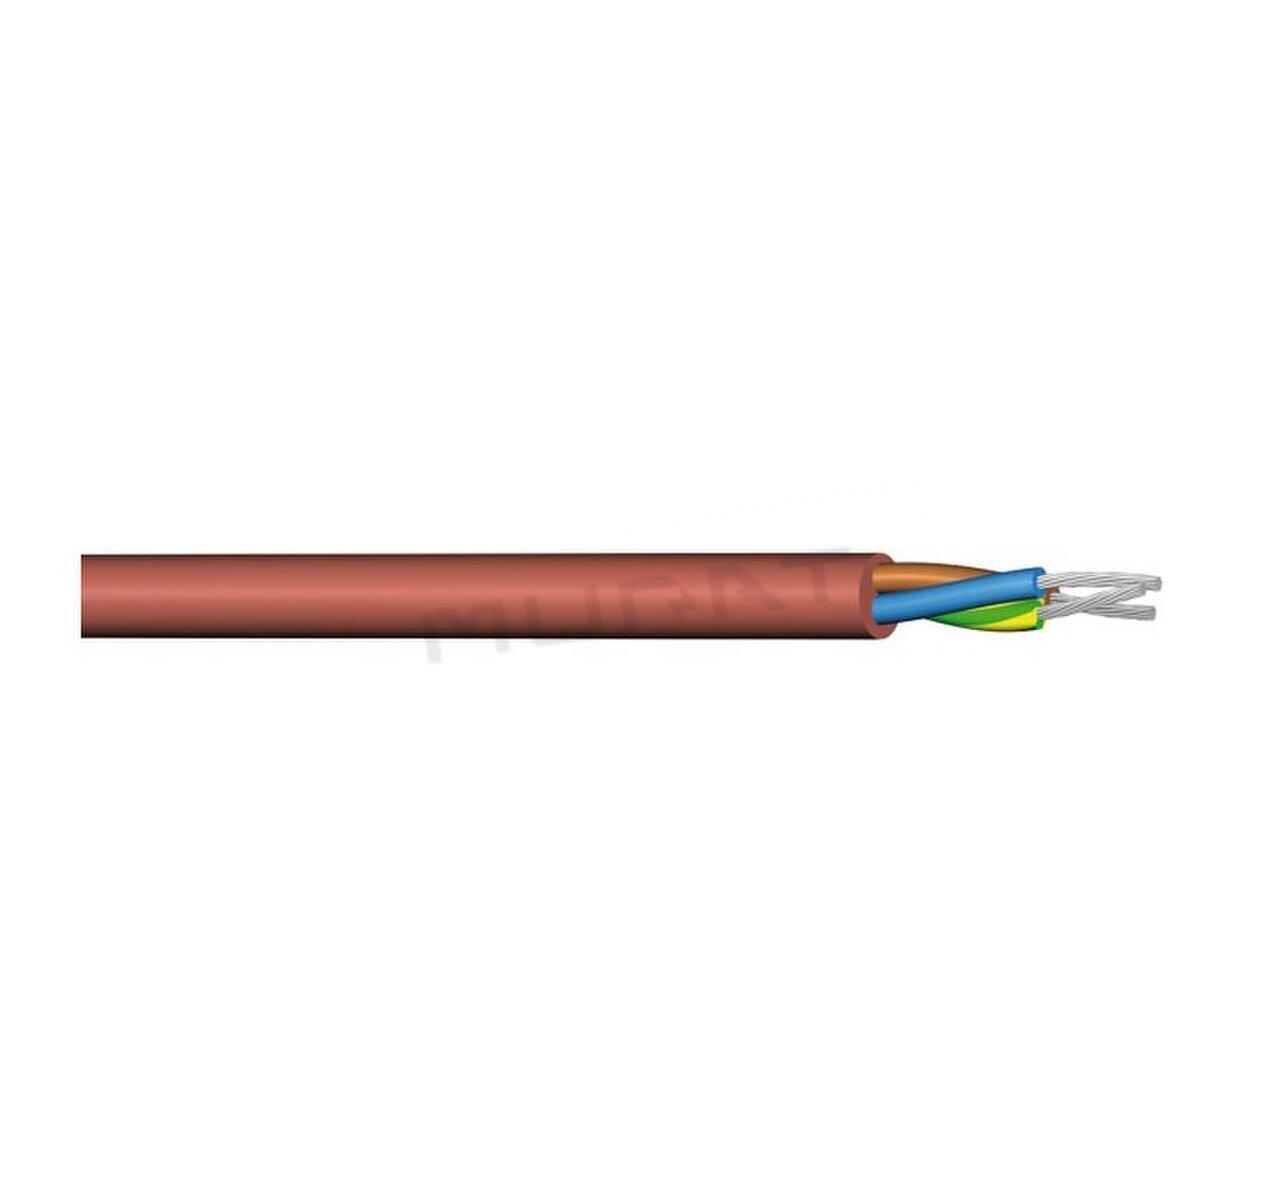 Kábel SIHF-O 2x0,35 mm2